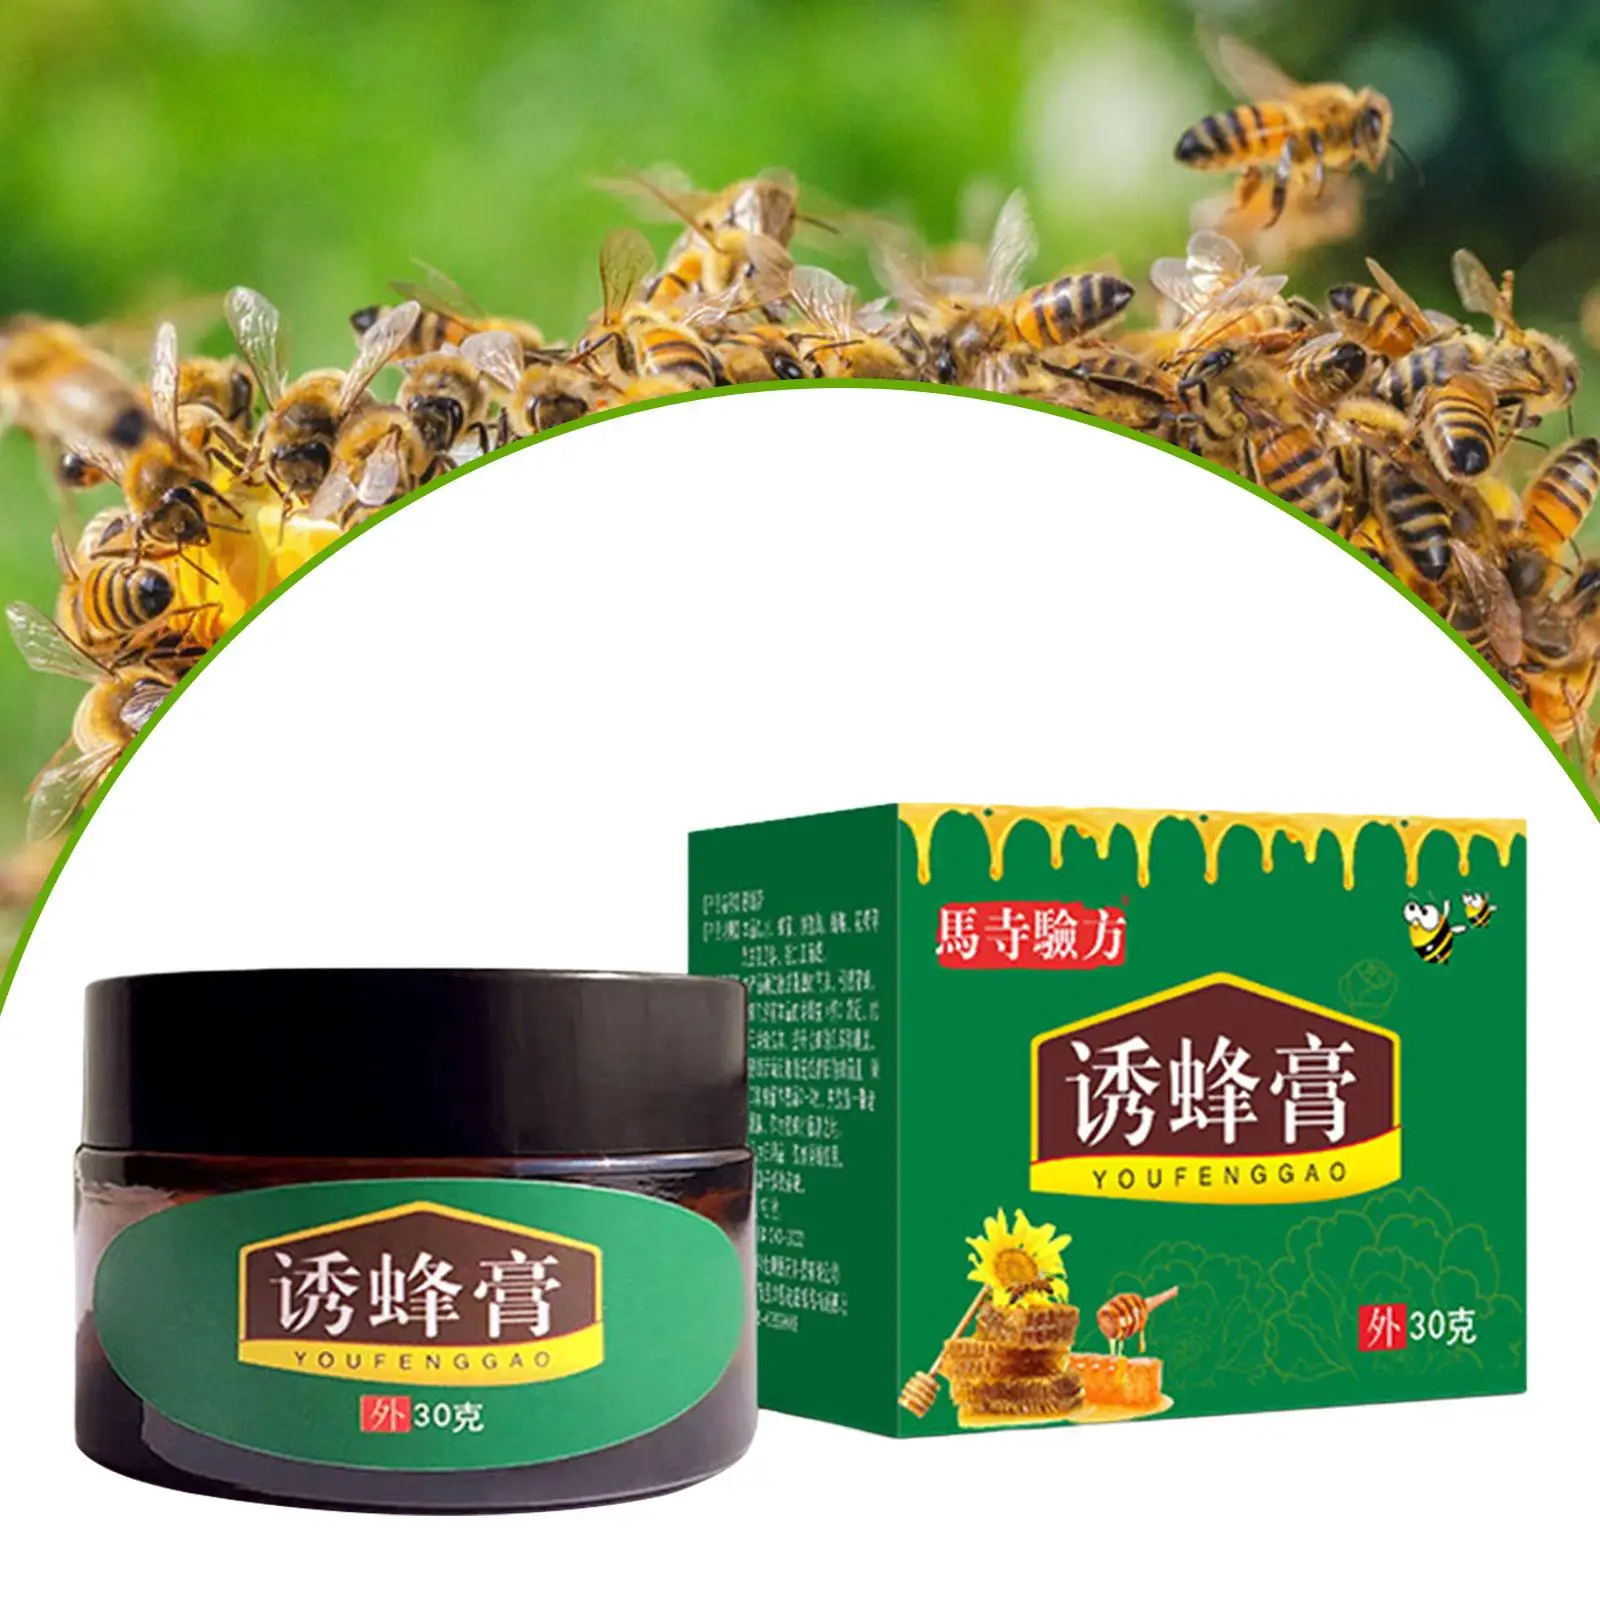 Bee Attract Lures Honey Tools Easy Attract Beekeeping Equipment Lightweight Portable Honey Bee Swarm Attract Lures